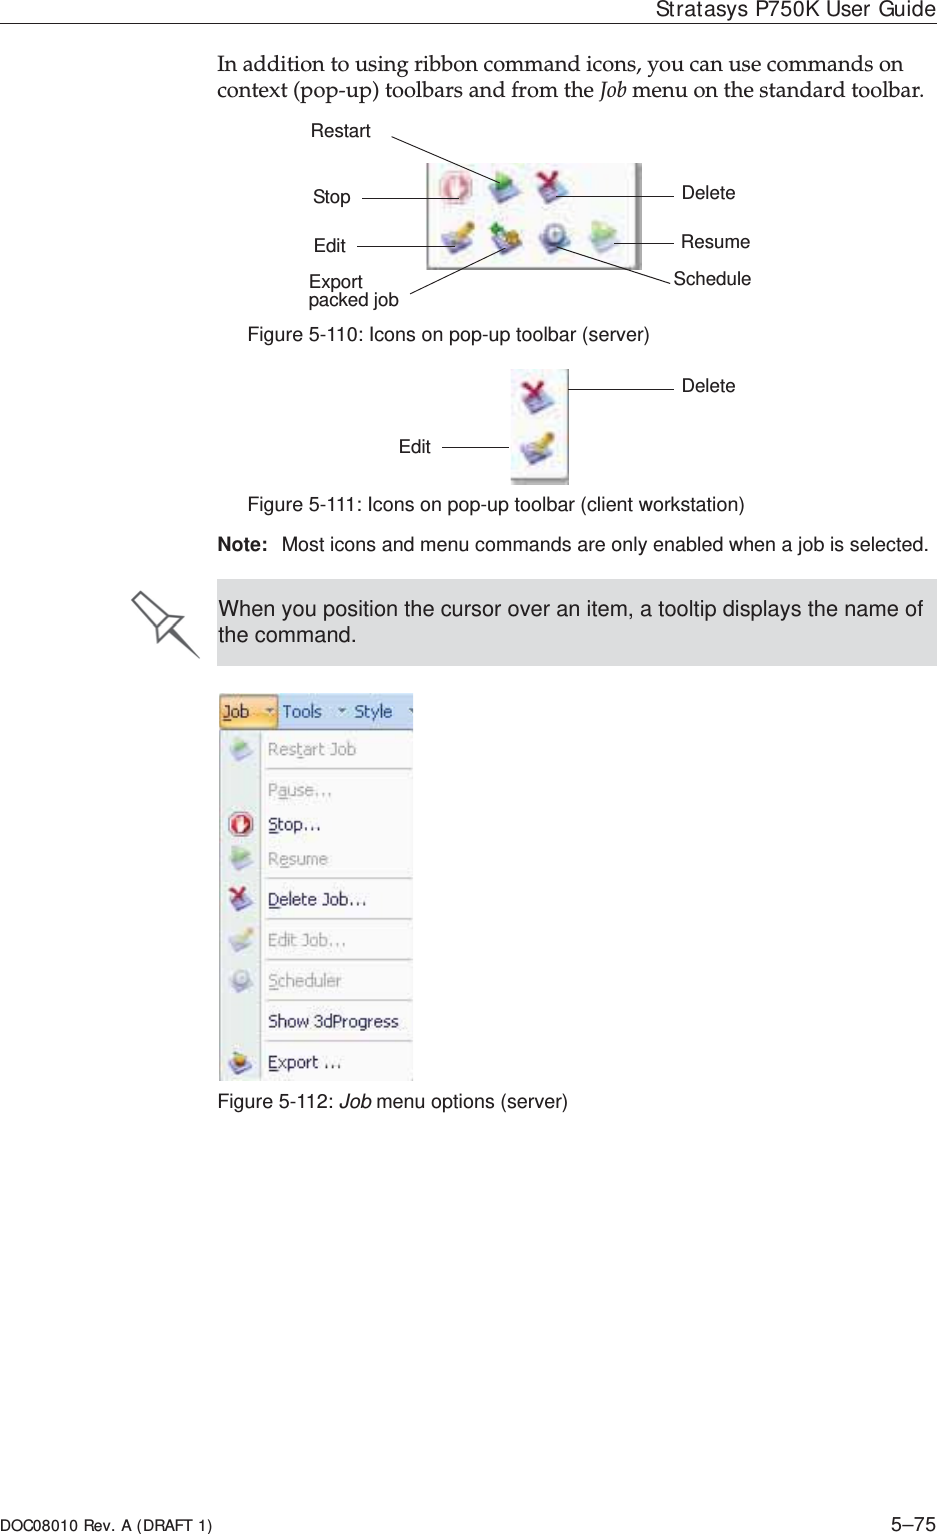 DOC08010 Rev. A (DRAFT 1) 5–75Stratasys P750K User GuideInȱadditionȱtoȱusingȱribbonȱcommandȱicons,ȱyouȱcanȱuseȱcommandsȱonȱcontextȱ(popȬup)ȱtoolbarsȱandȱfromȱtheȱJobȱmenuȱonȱtheȱstandardȱtoolbar.ȱFigure 5-110: Icons on pop-up toolbar (server)Figure 5-111: Icons on pop-up toolbar (client workstation)Note: Most icons and menu commands are only enabled when a job is selected.Figure 5-112: Job menu options (server)StopEditExport packed job ScheduleResumeRestartDeleteEditDeleteWhen you position the cursor over an item, a tooltip displays the name of the command.